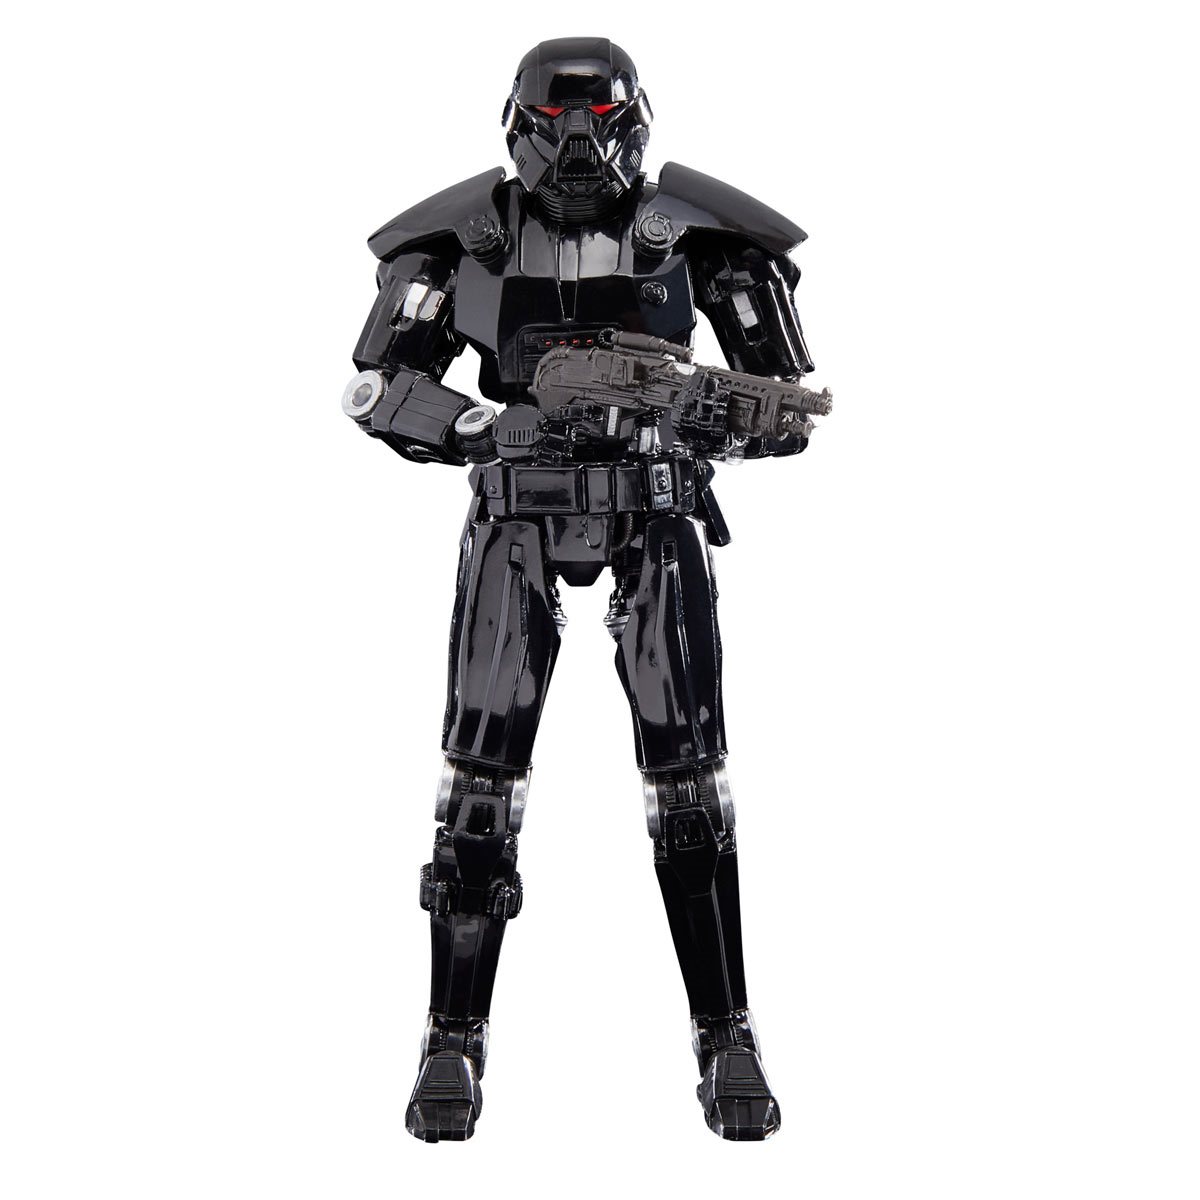 Star Wars The Black Series Dark Trooper Deluxe 6 Inch Action Figure